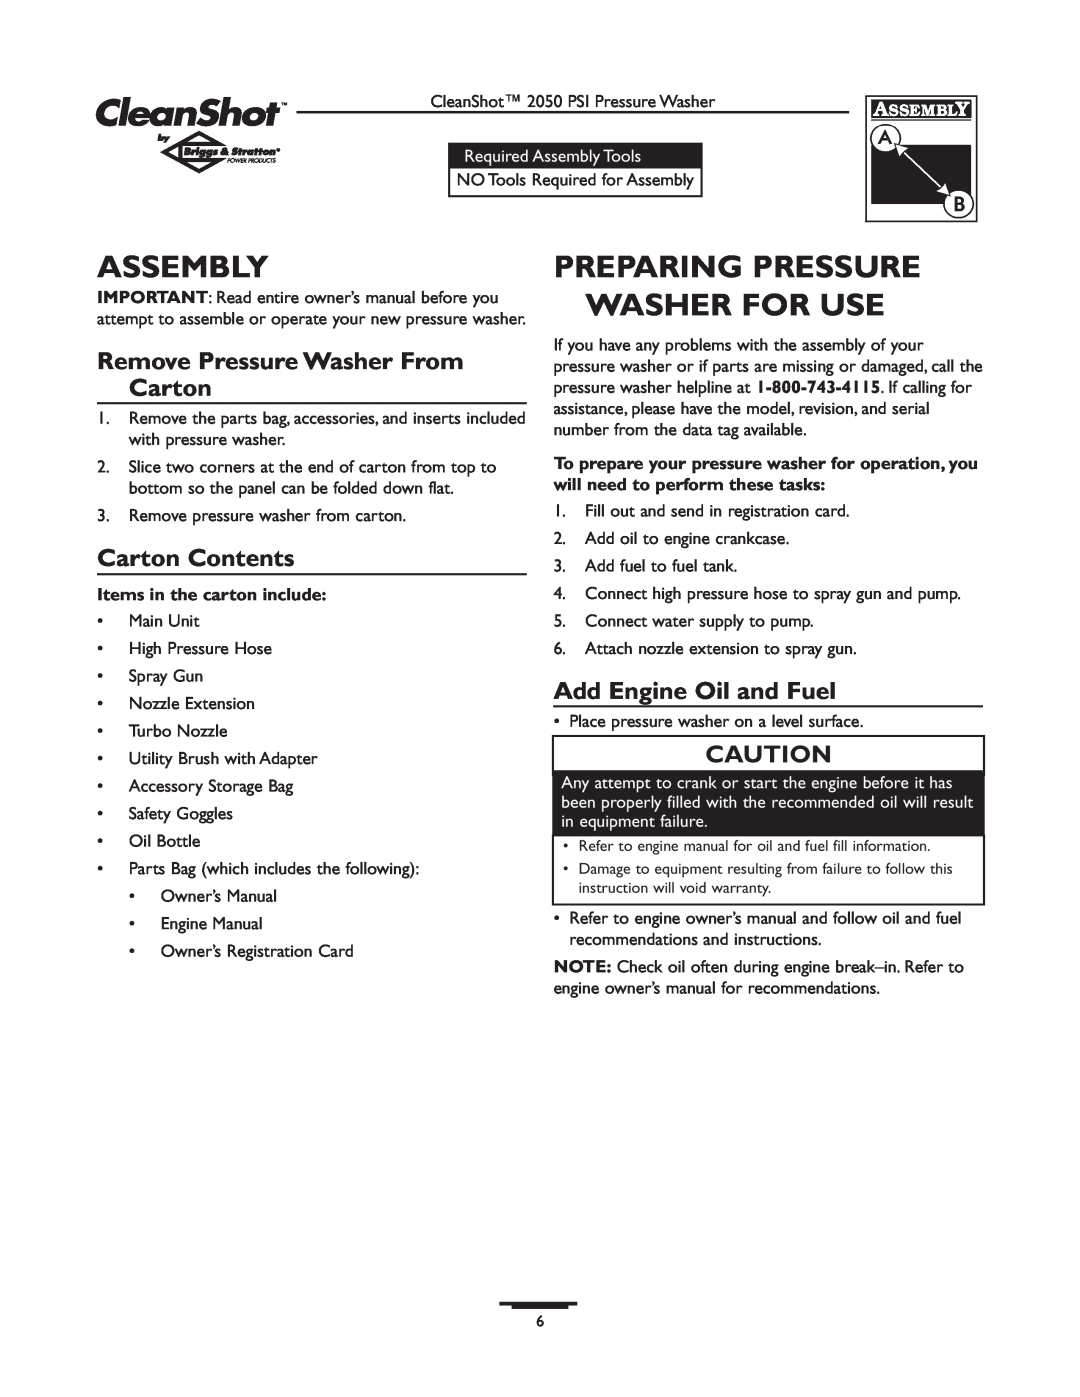 Briggs & Stratton 2050PSI Assembly, Preparing Pressure Washer For Use, Remove Pressure Washer From Carton, Carton Contents 